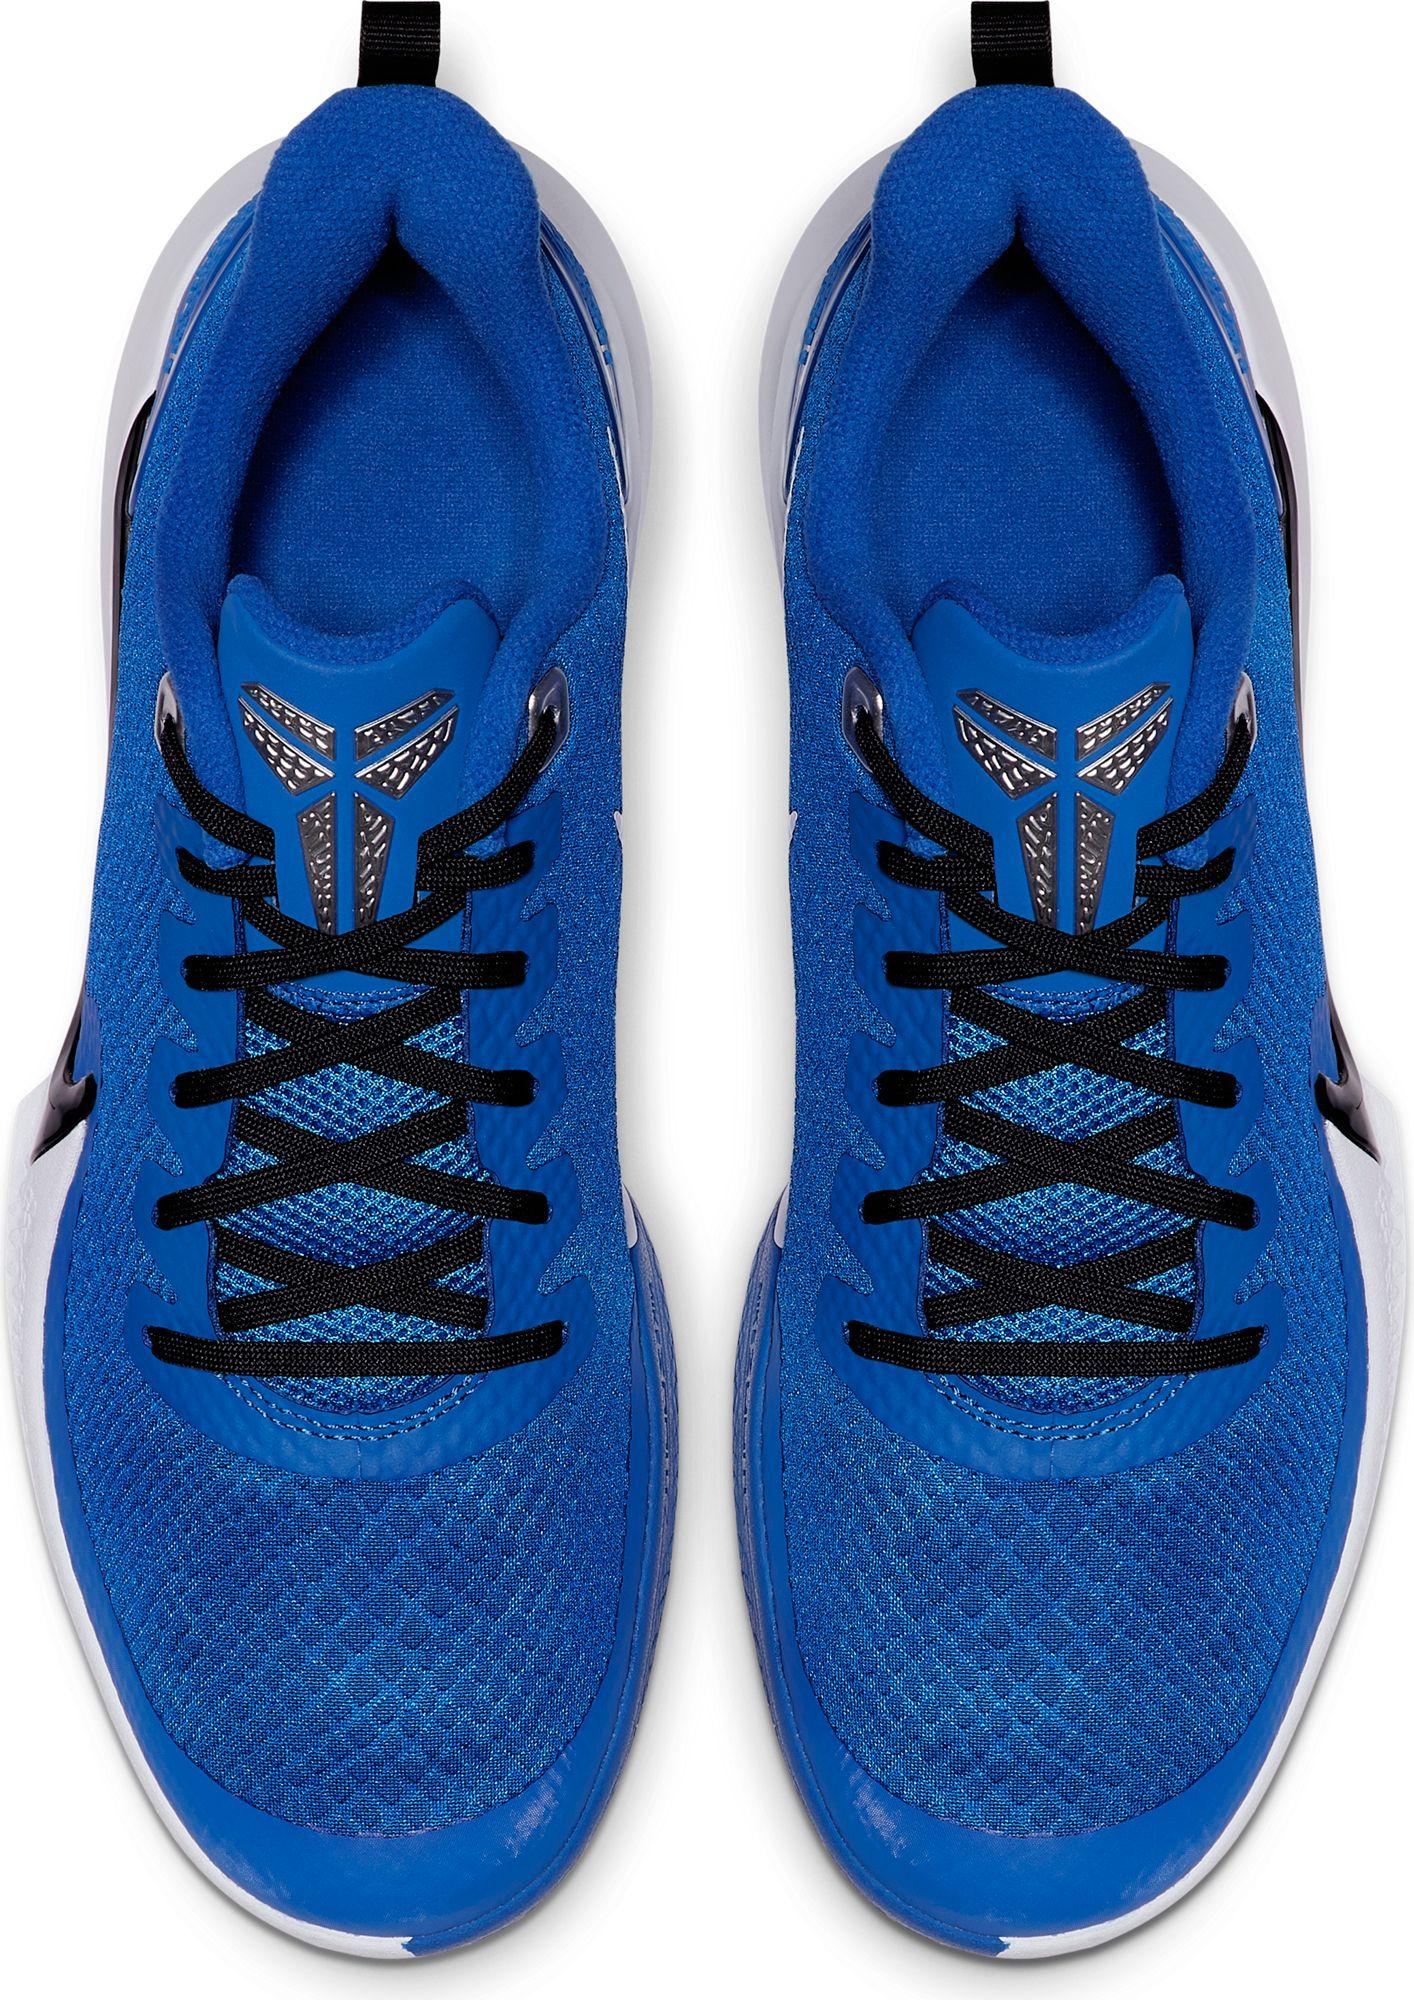 Nike Kobe Mamba Focus Basketball Shoes in Blue/Black (Blue) for Men - Lyst